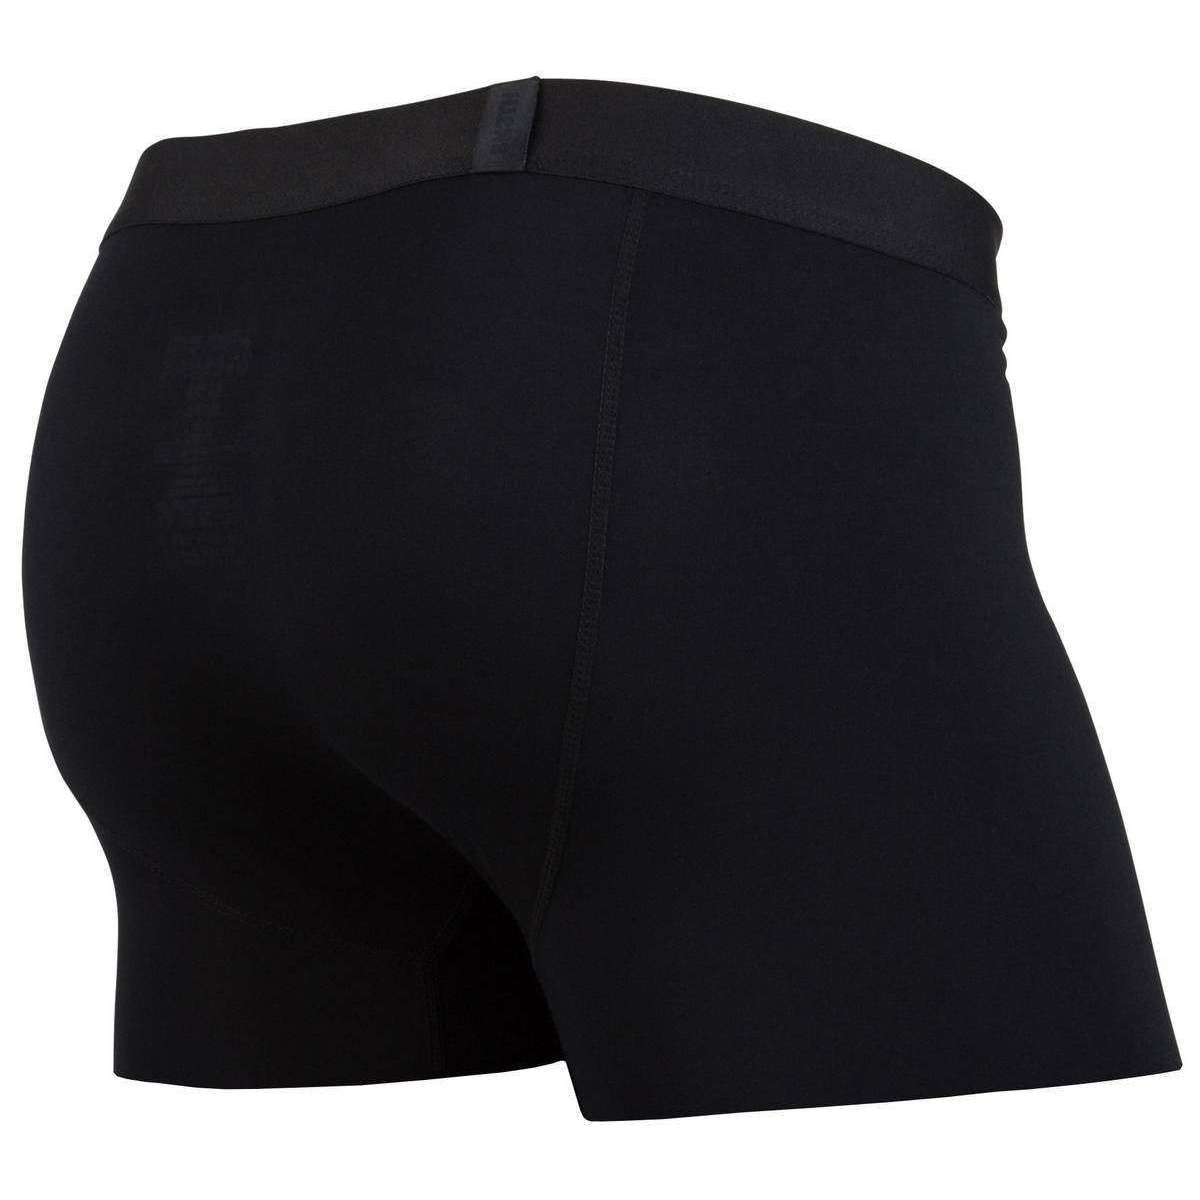 BN3TH Classic Trunk - Black, Black Underwear